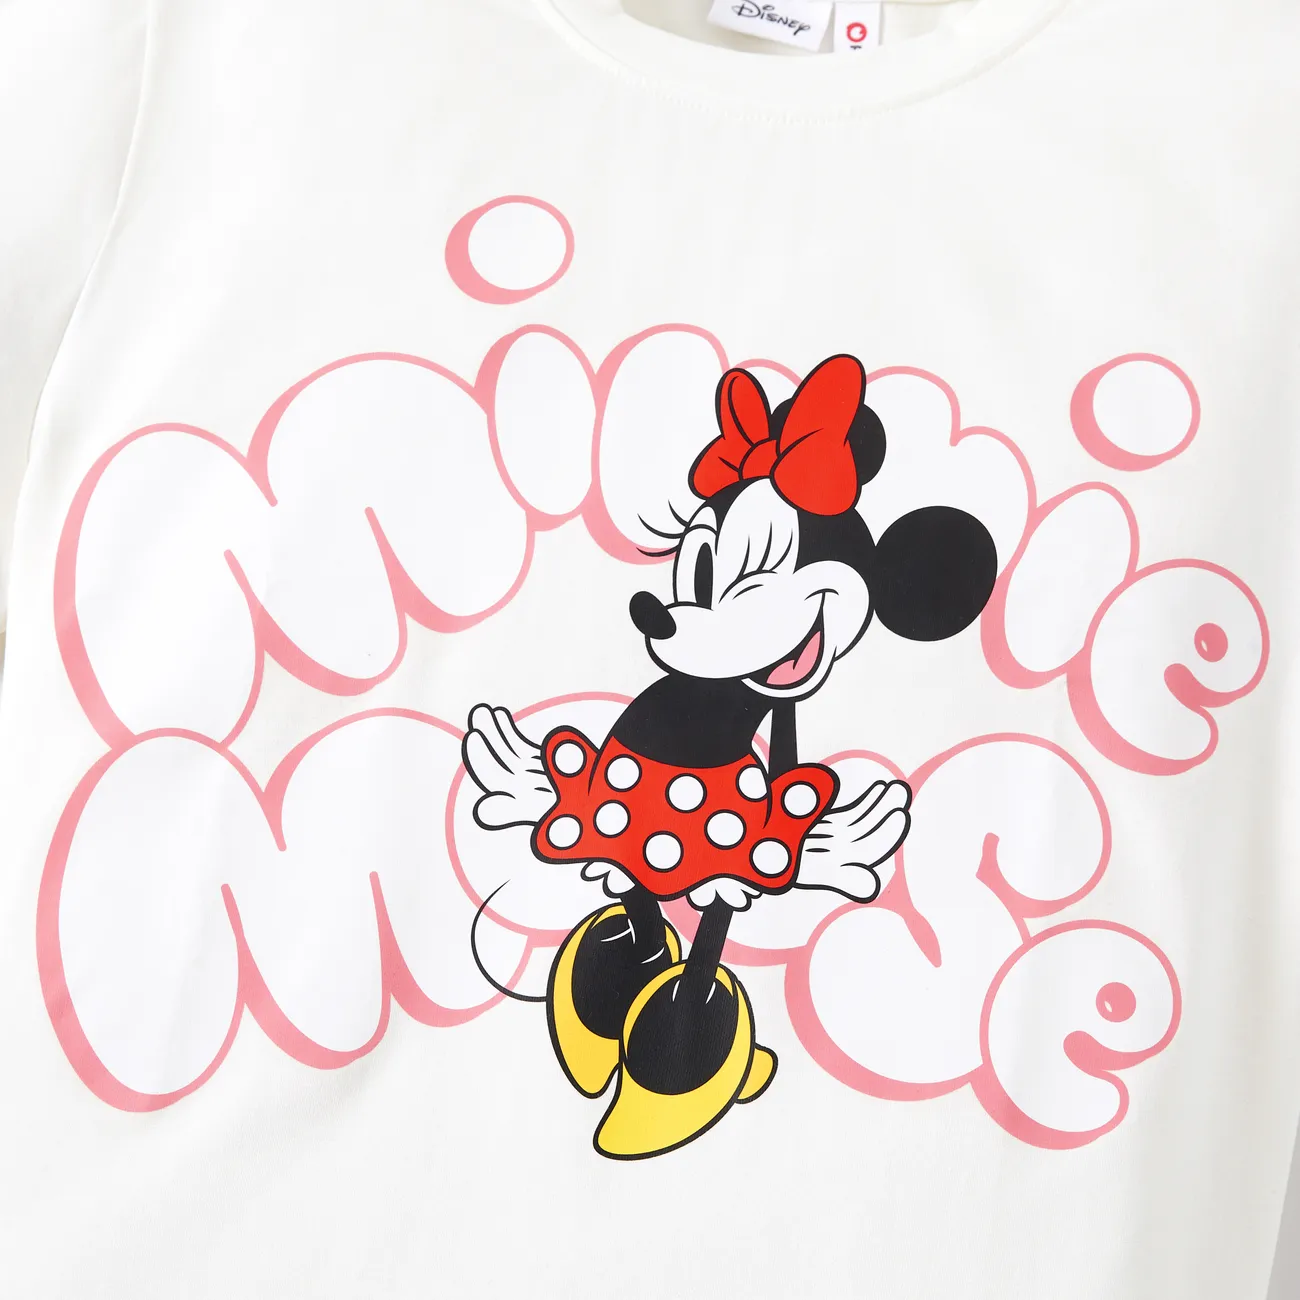 Disney Mickey and Friends Look de família Manga curta Conjuntos de roupa para a família Tops off white big image 1